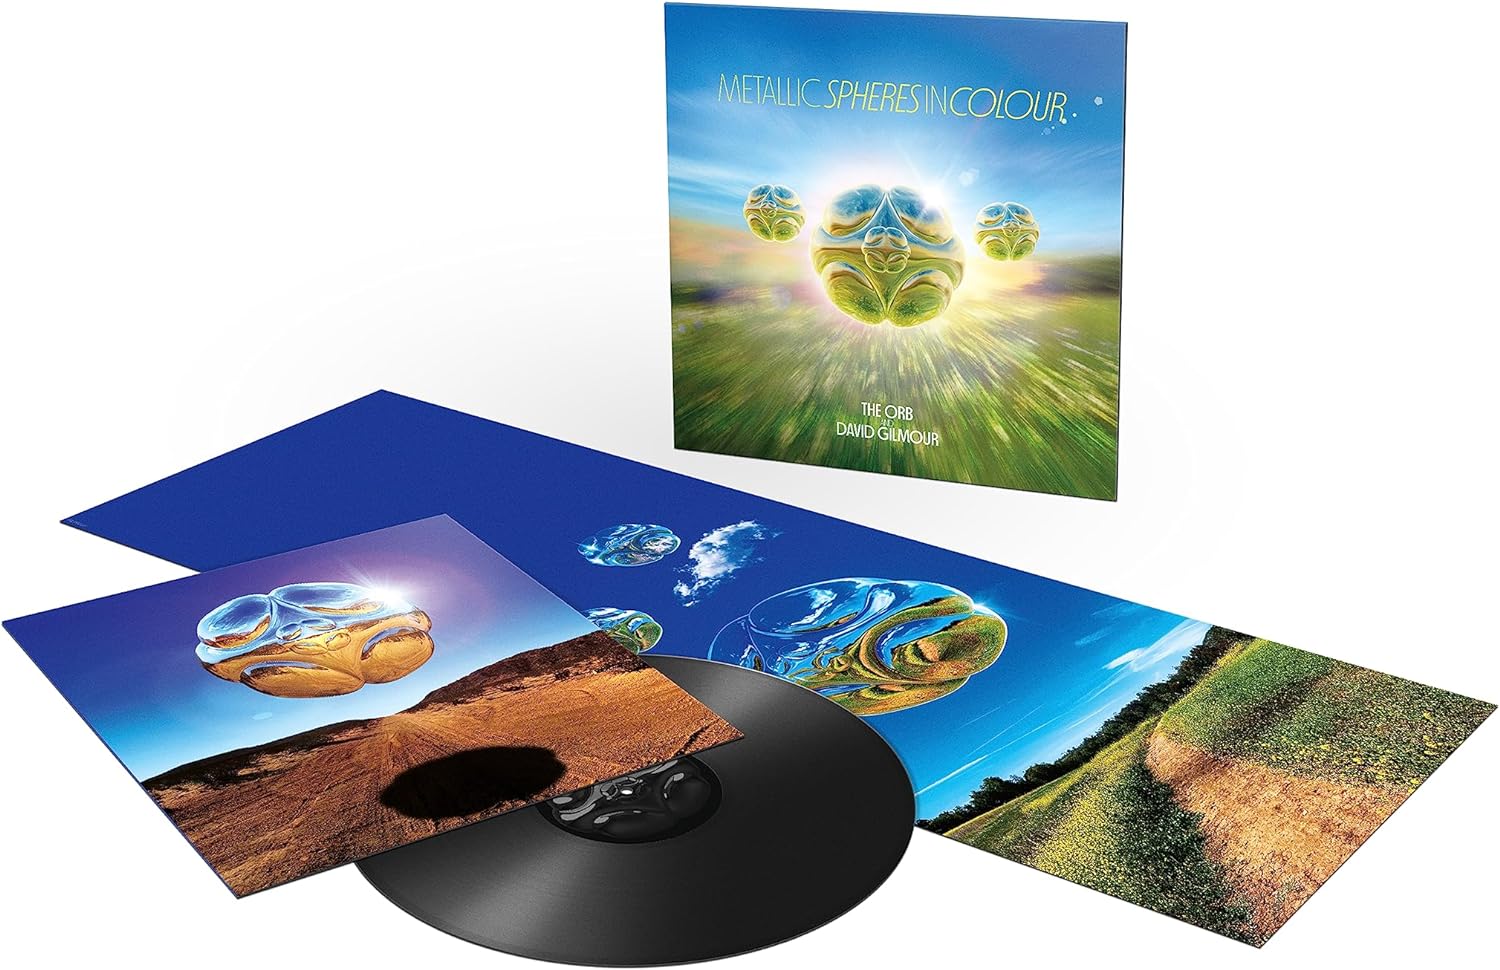 Metallic Spheres In Colour - Vinyl | The Orb, David Gilmour